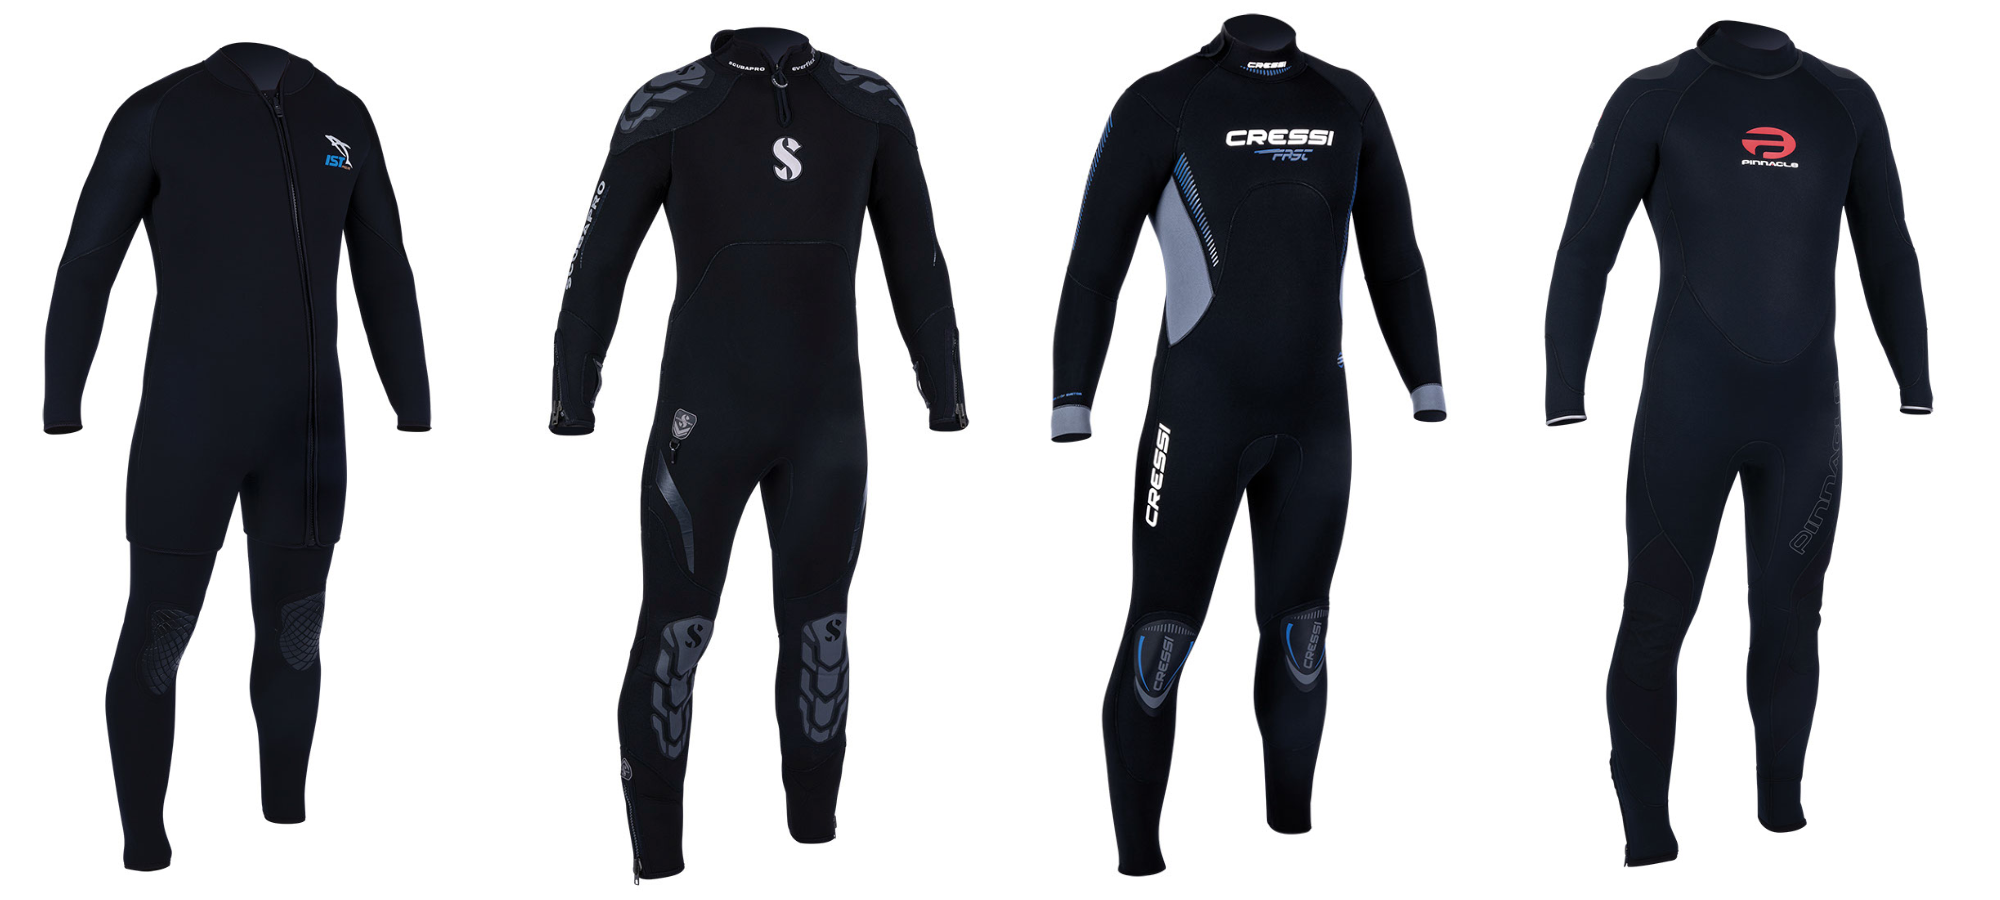 Hooded 7mm Neoprene Swetsuits + Keep Warm Wet Suit Swimsuit